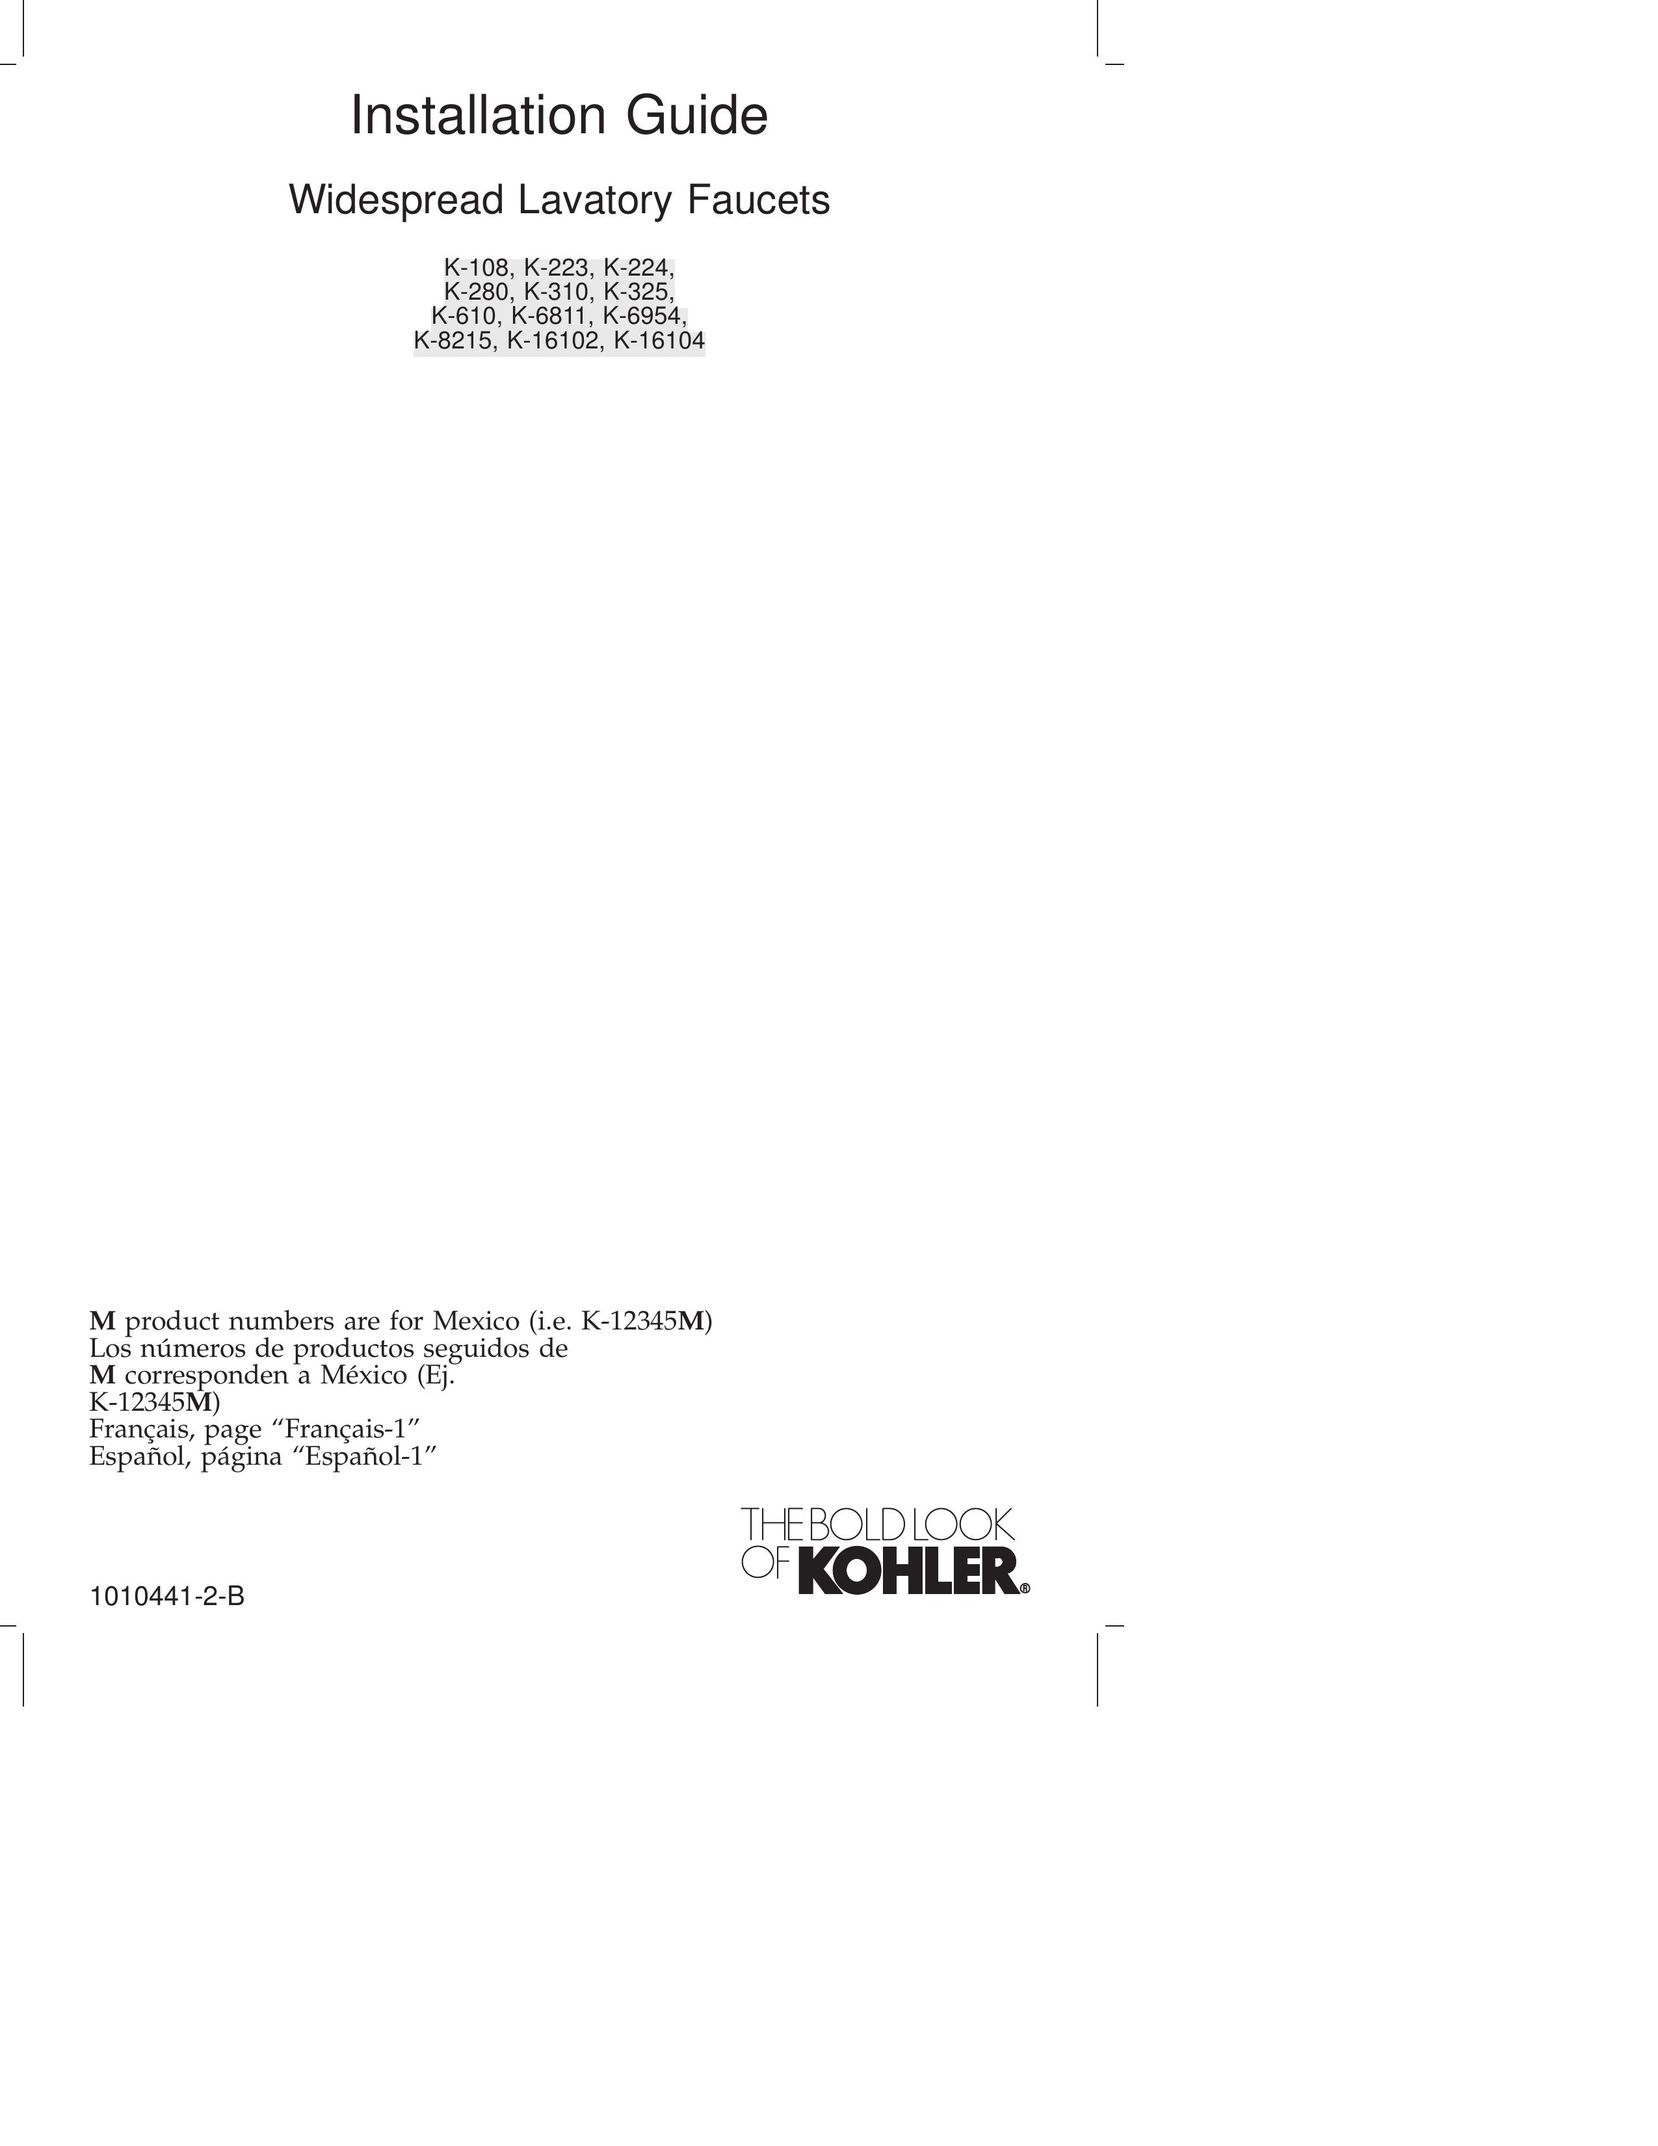 Kohler K-16104 Plumbing Product User Manual